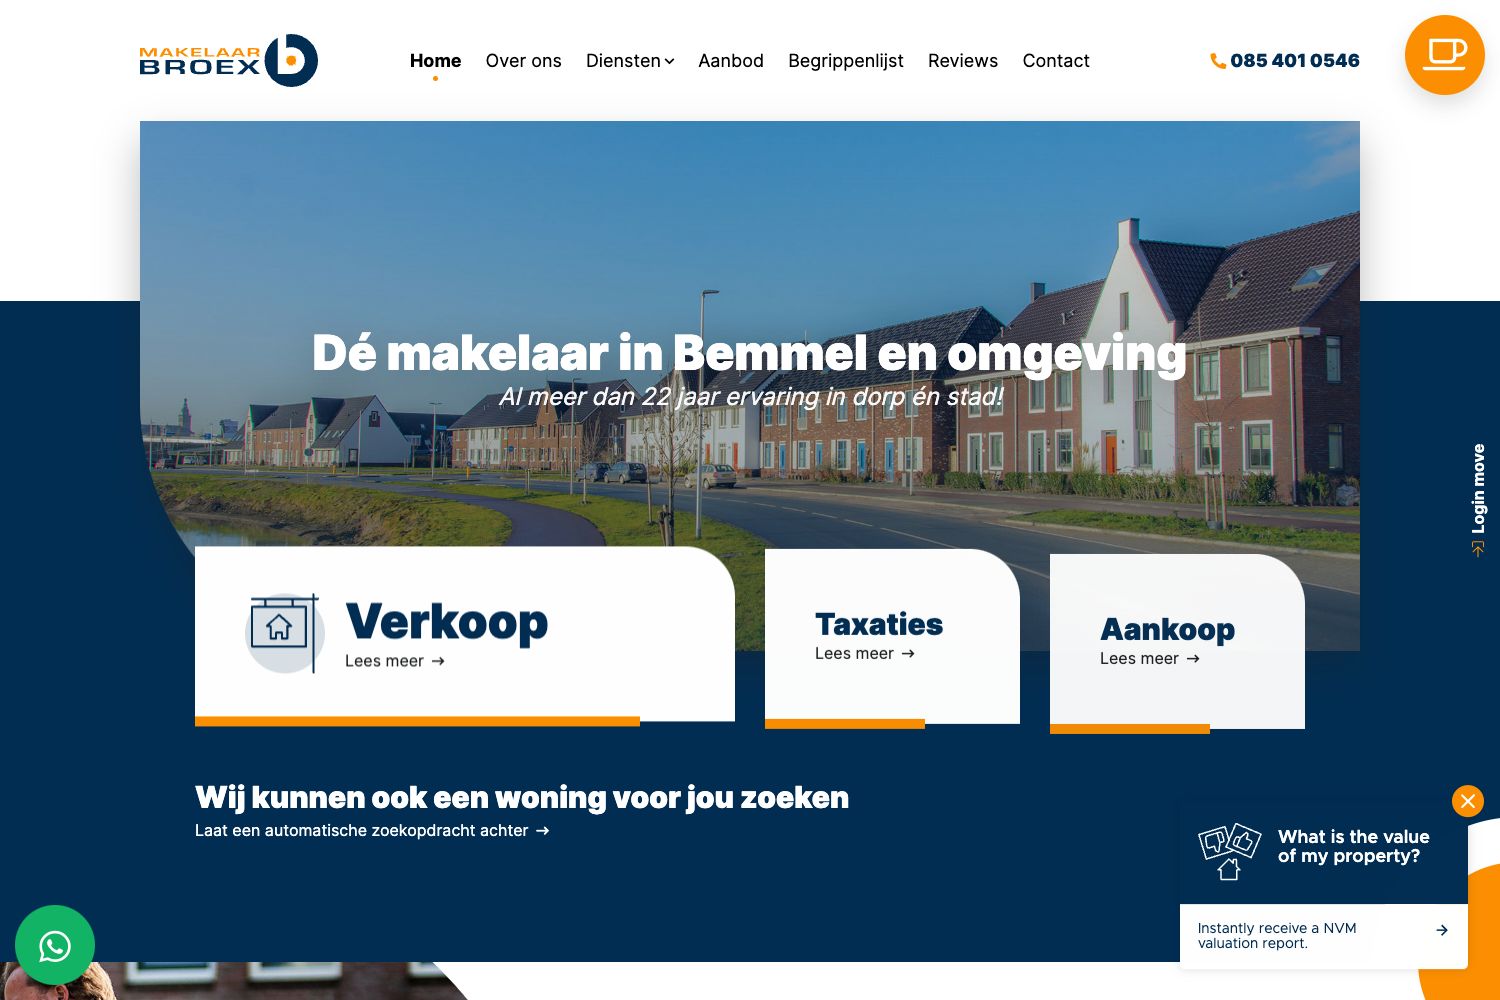 Website screenshot https://makelaarbroex.nl